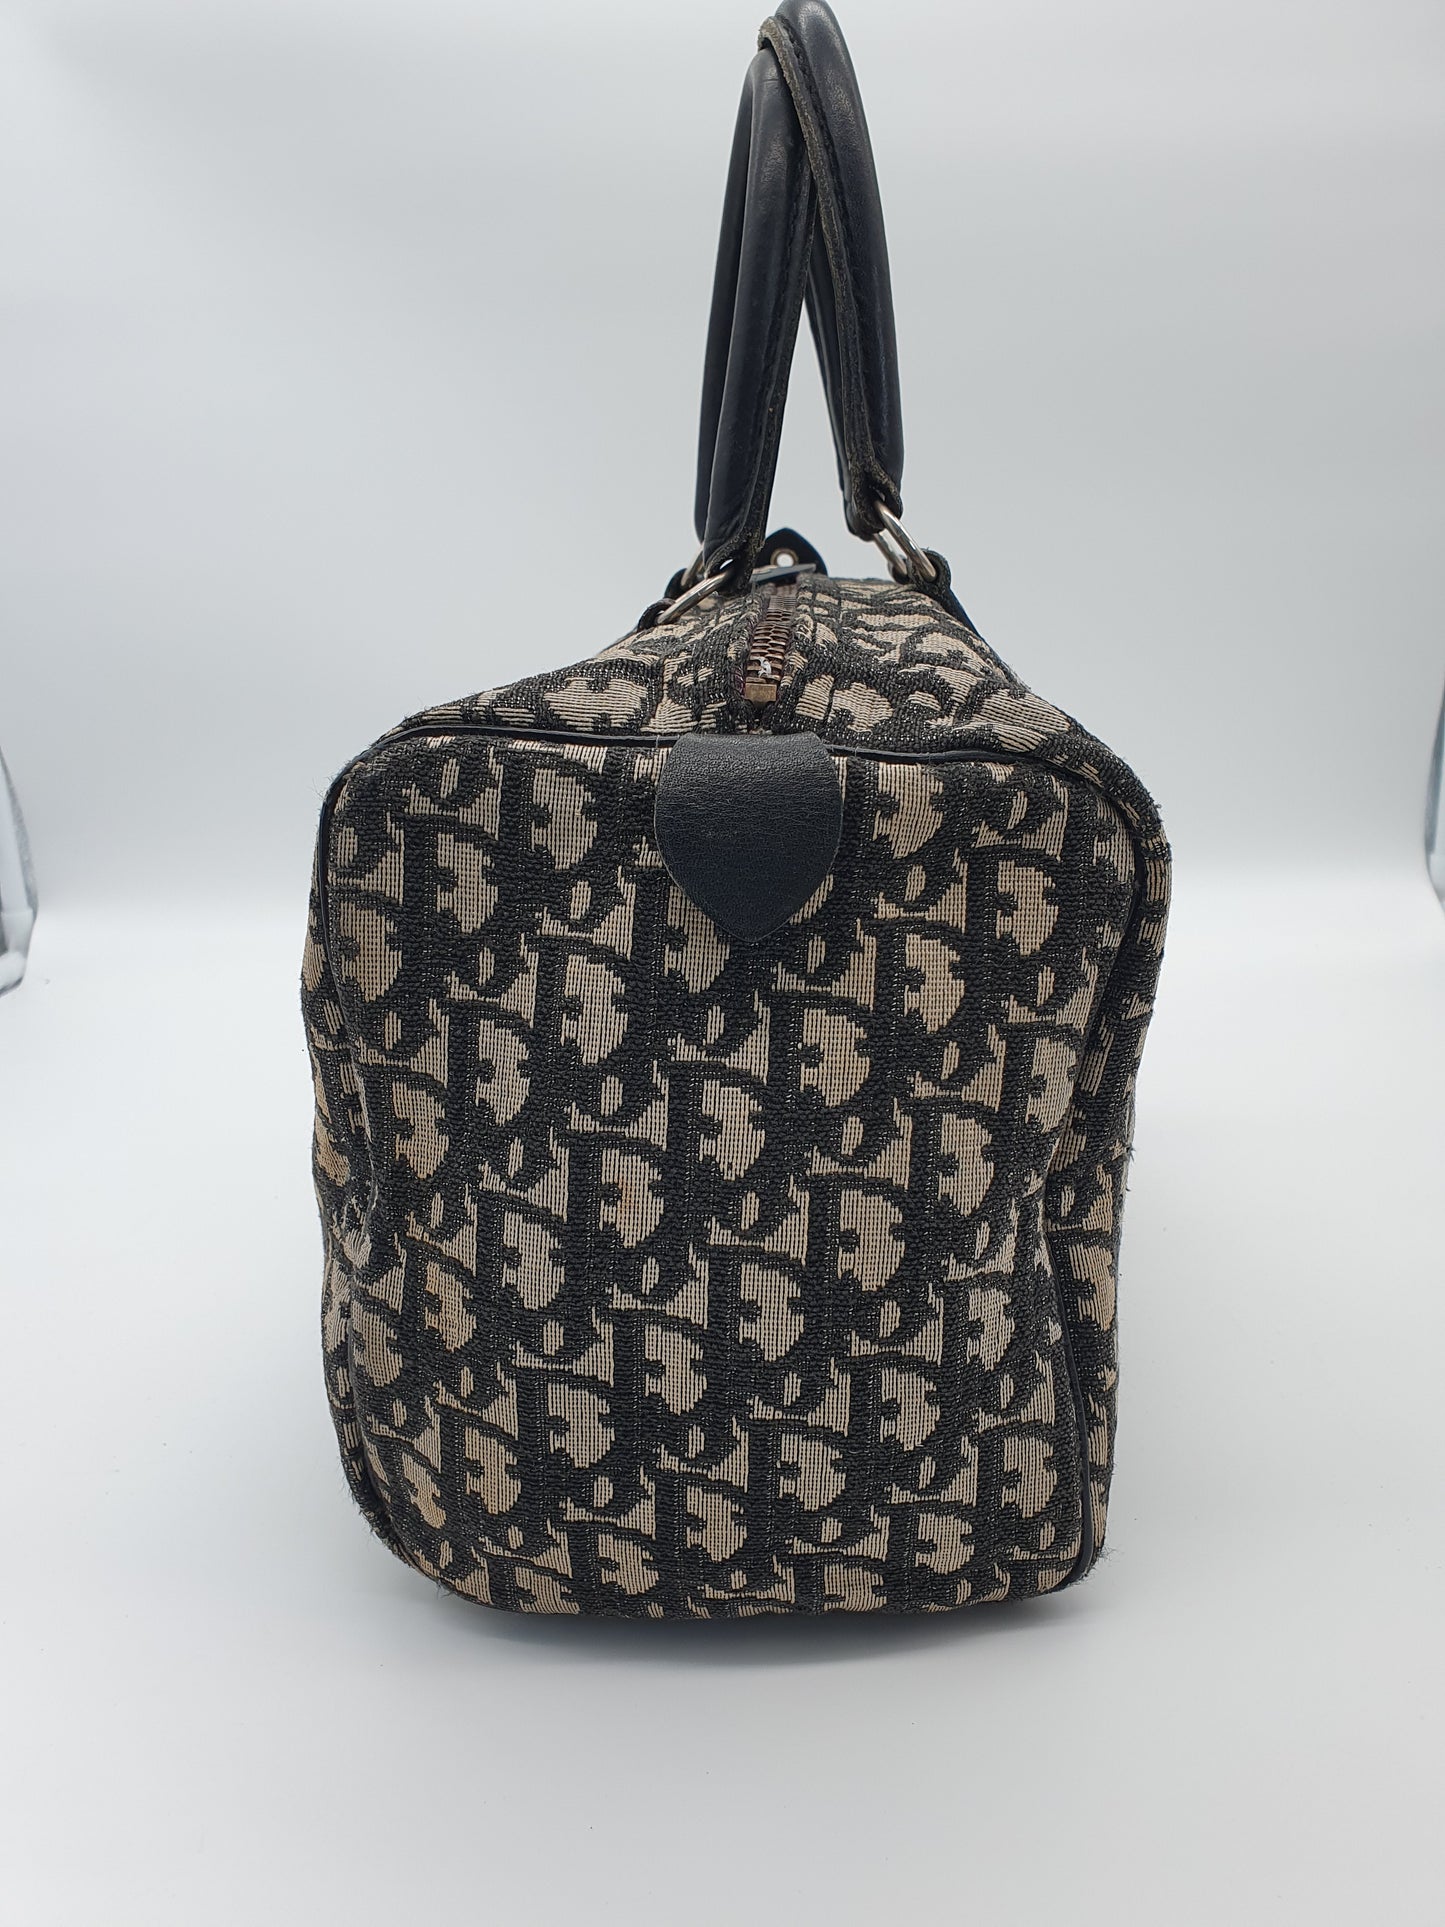 Dior bowling vintage  handbag